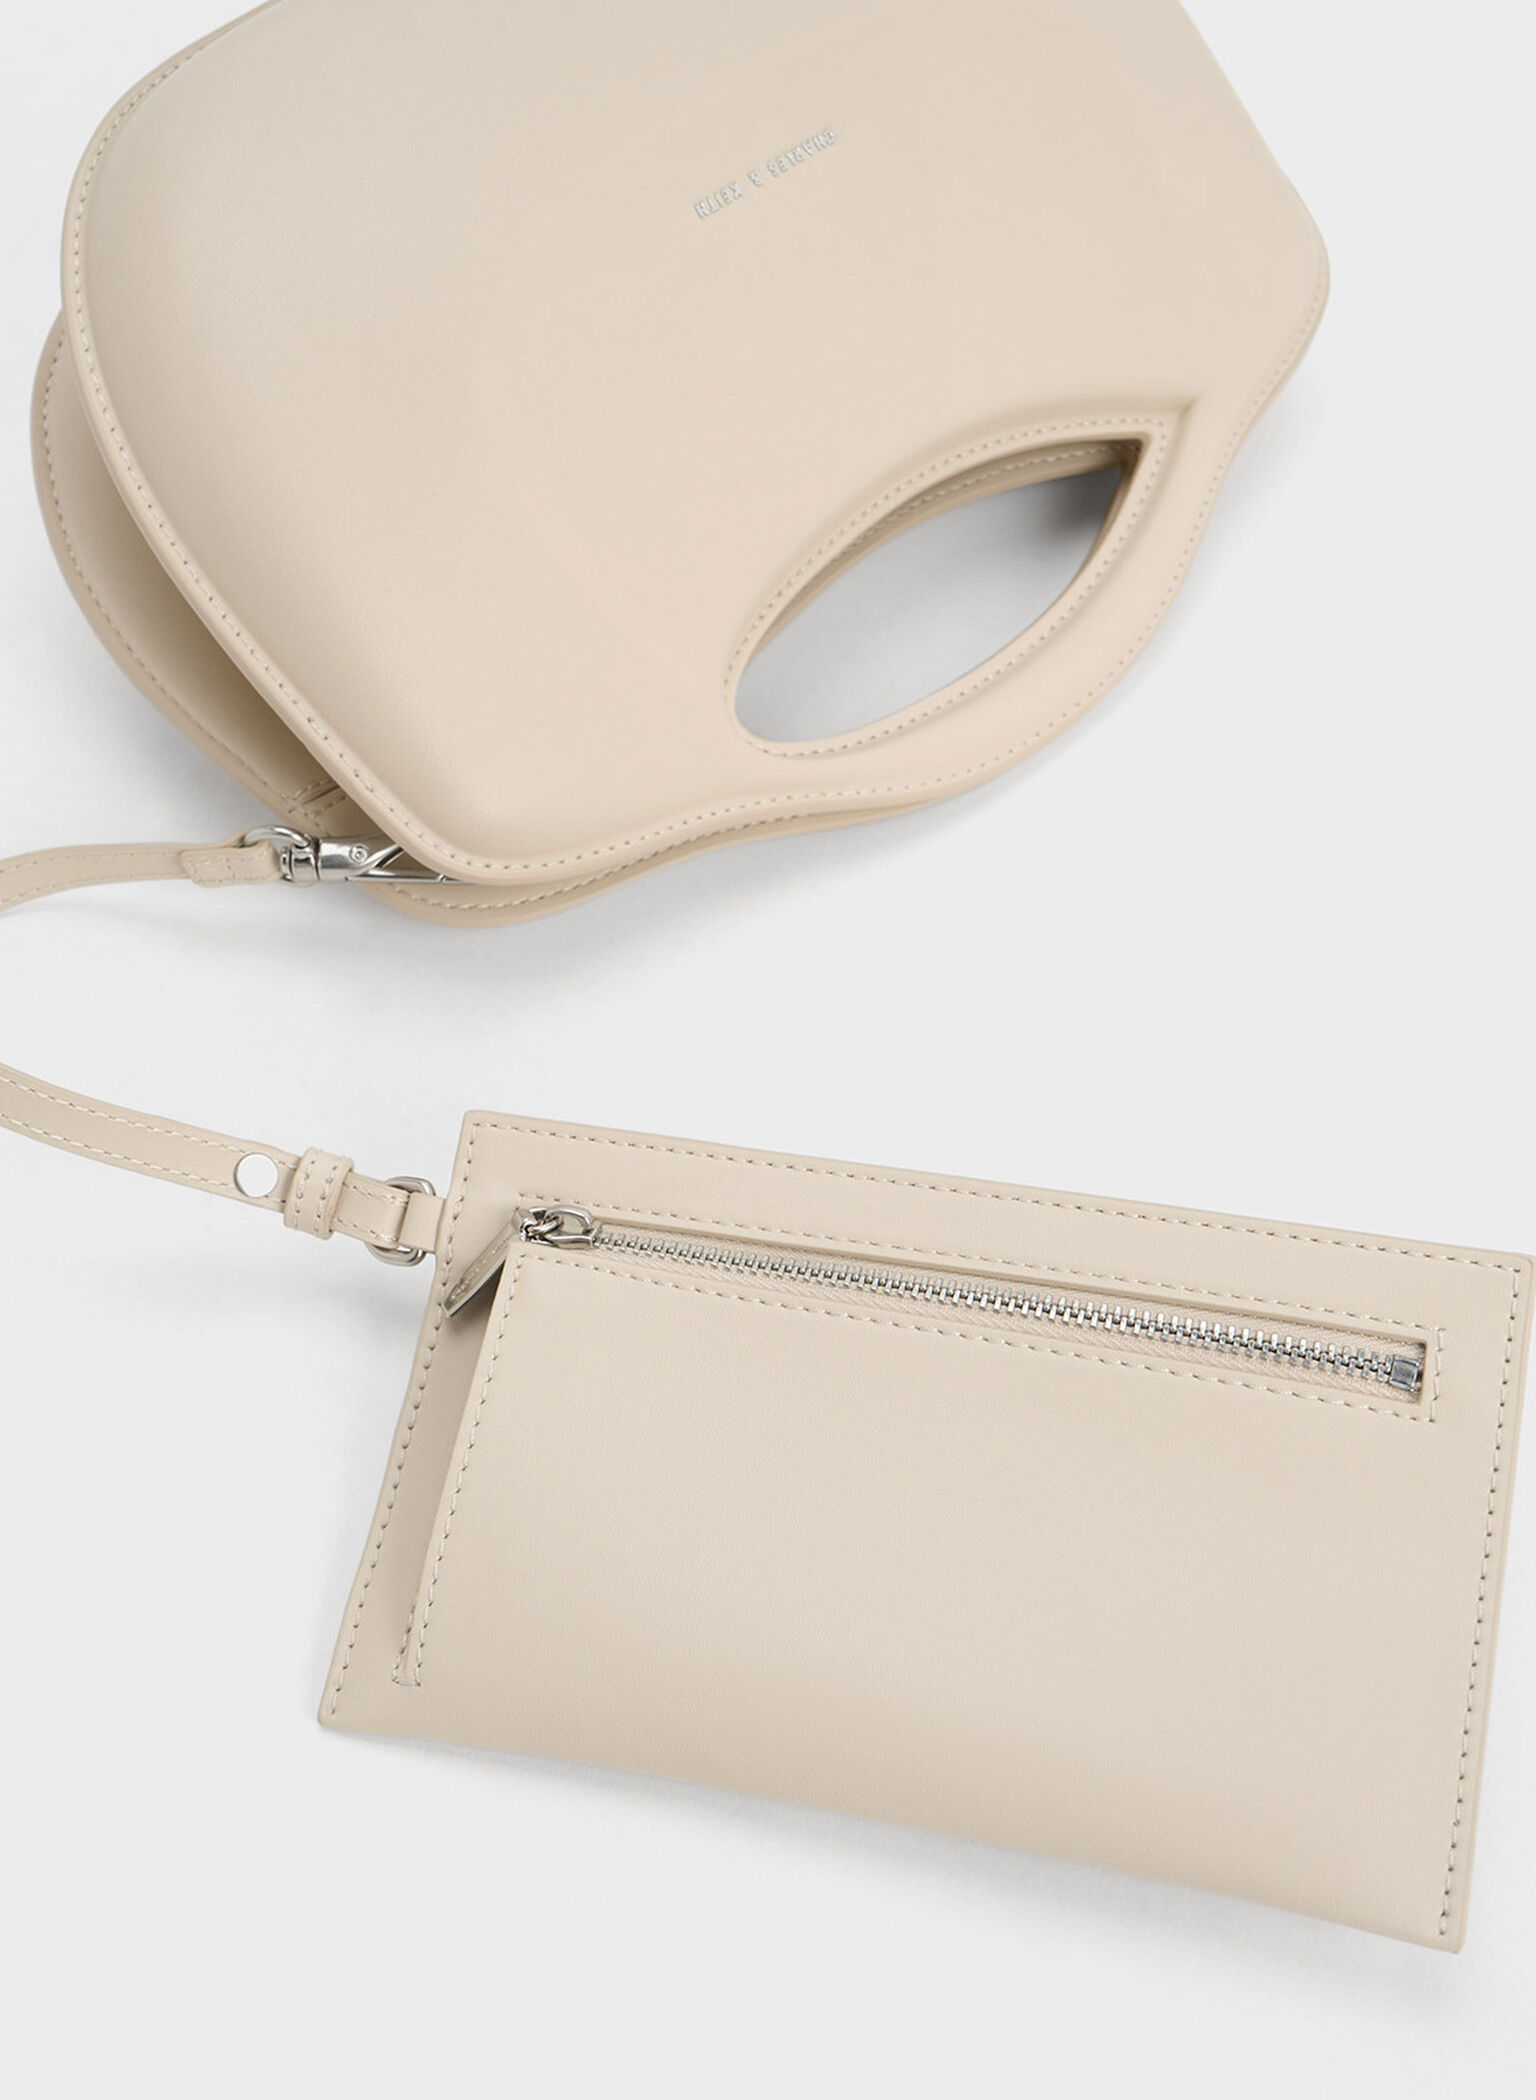 Cocoon Curved Handle Bag, Beige, hi-res